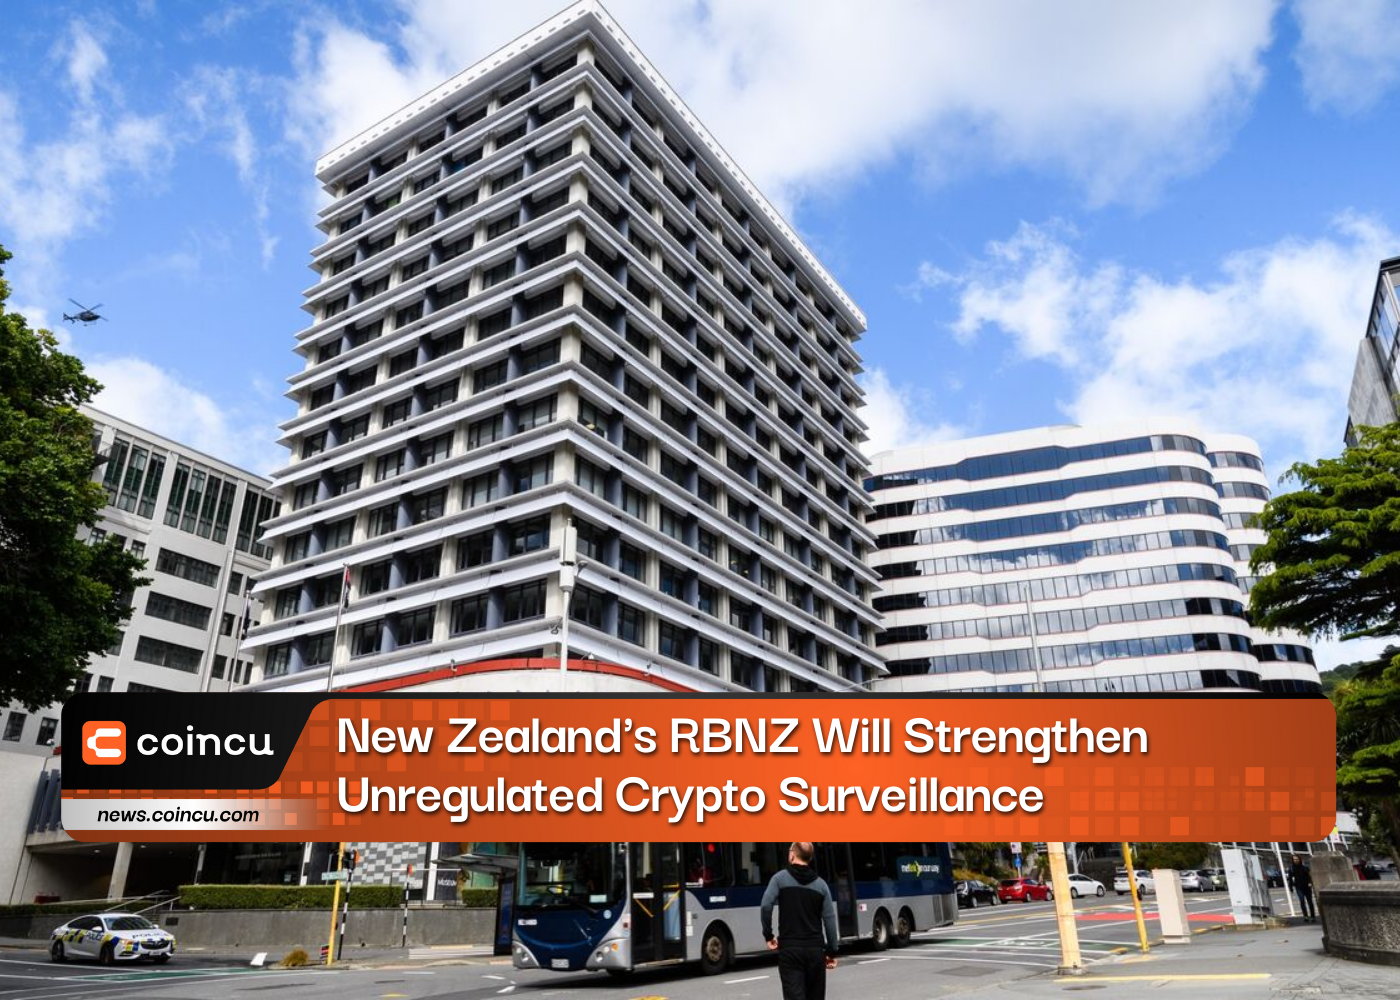 New Zealand's RBNZ Will Strengthen Unregulated Crypto Surveillance